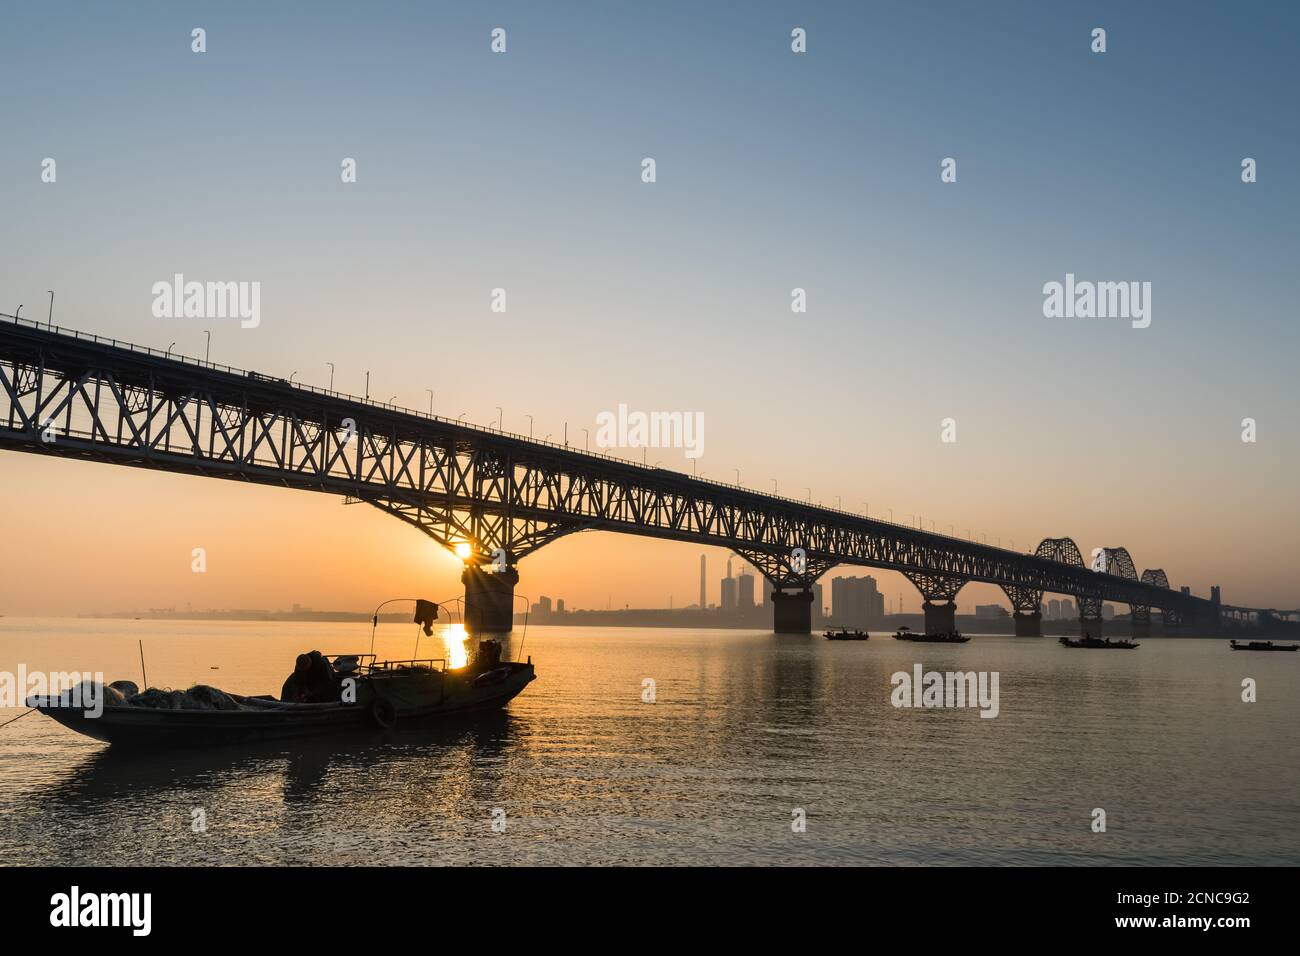 jiujiang highway and railway combined bridge in sunrise Stock Photo